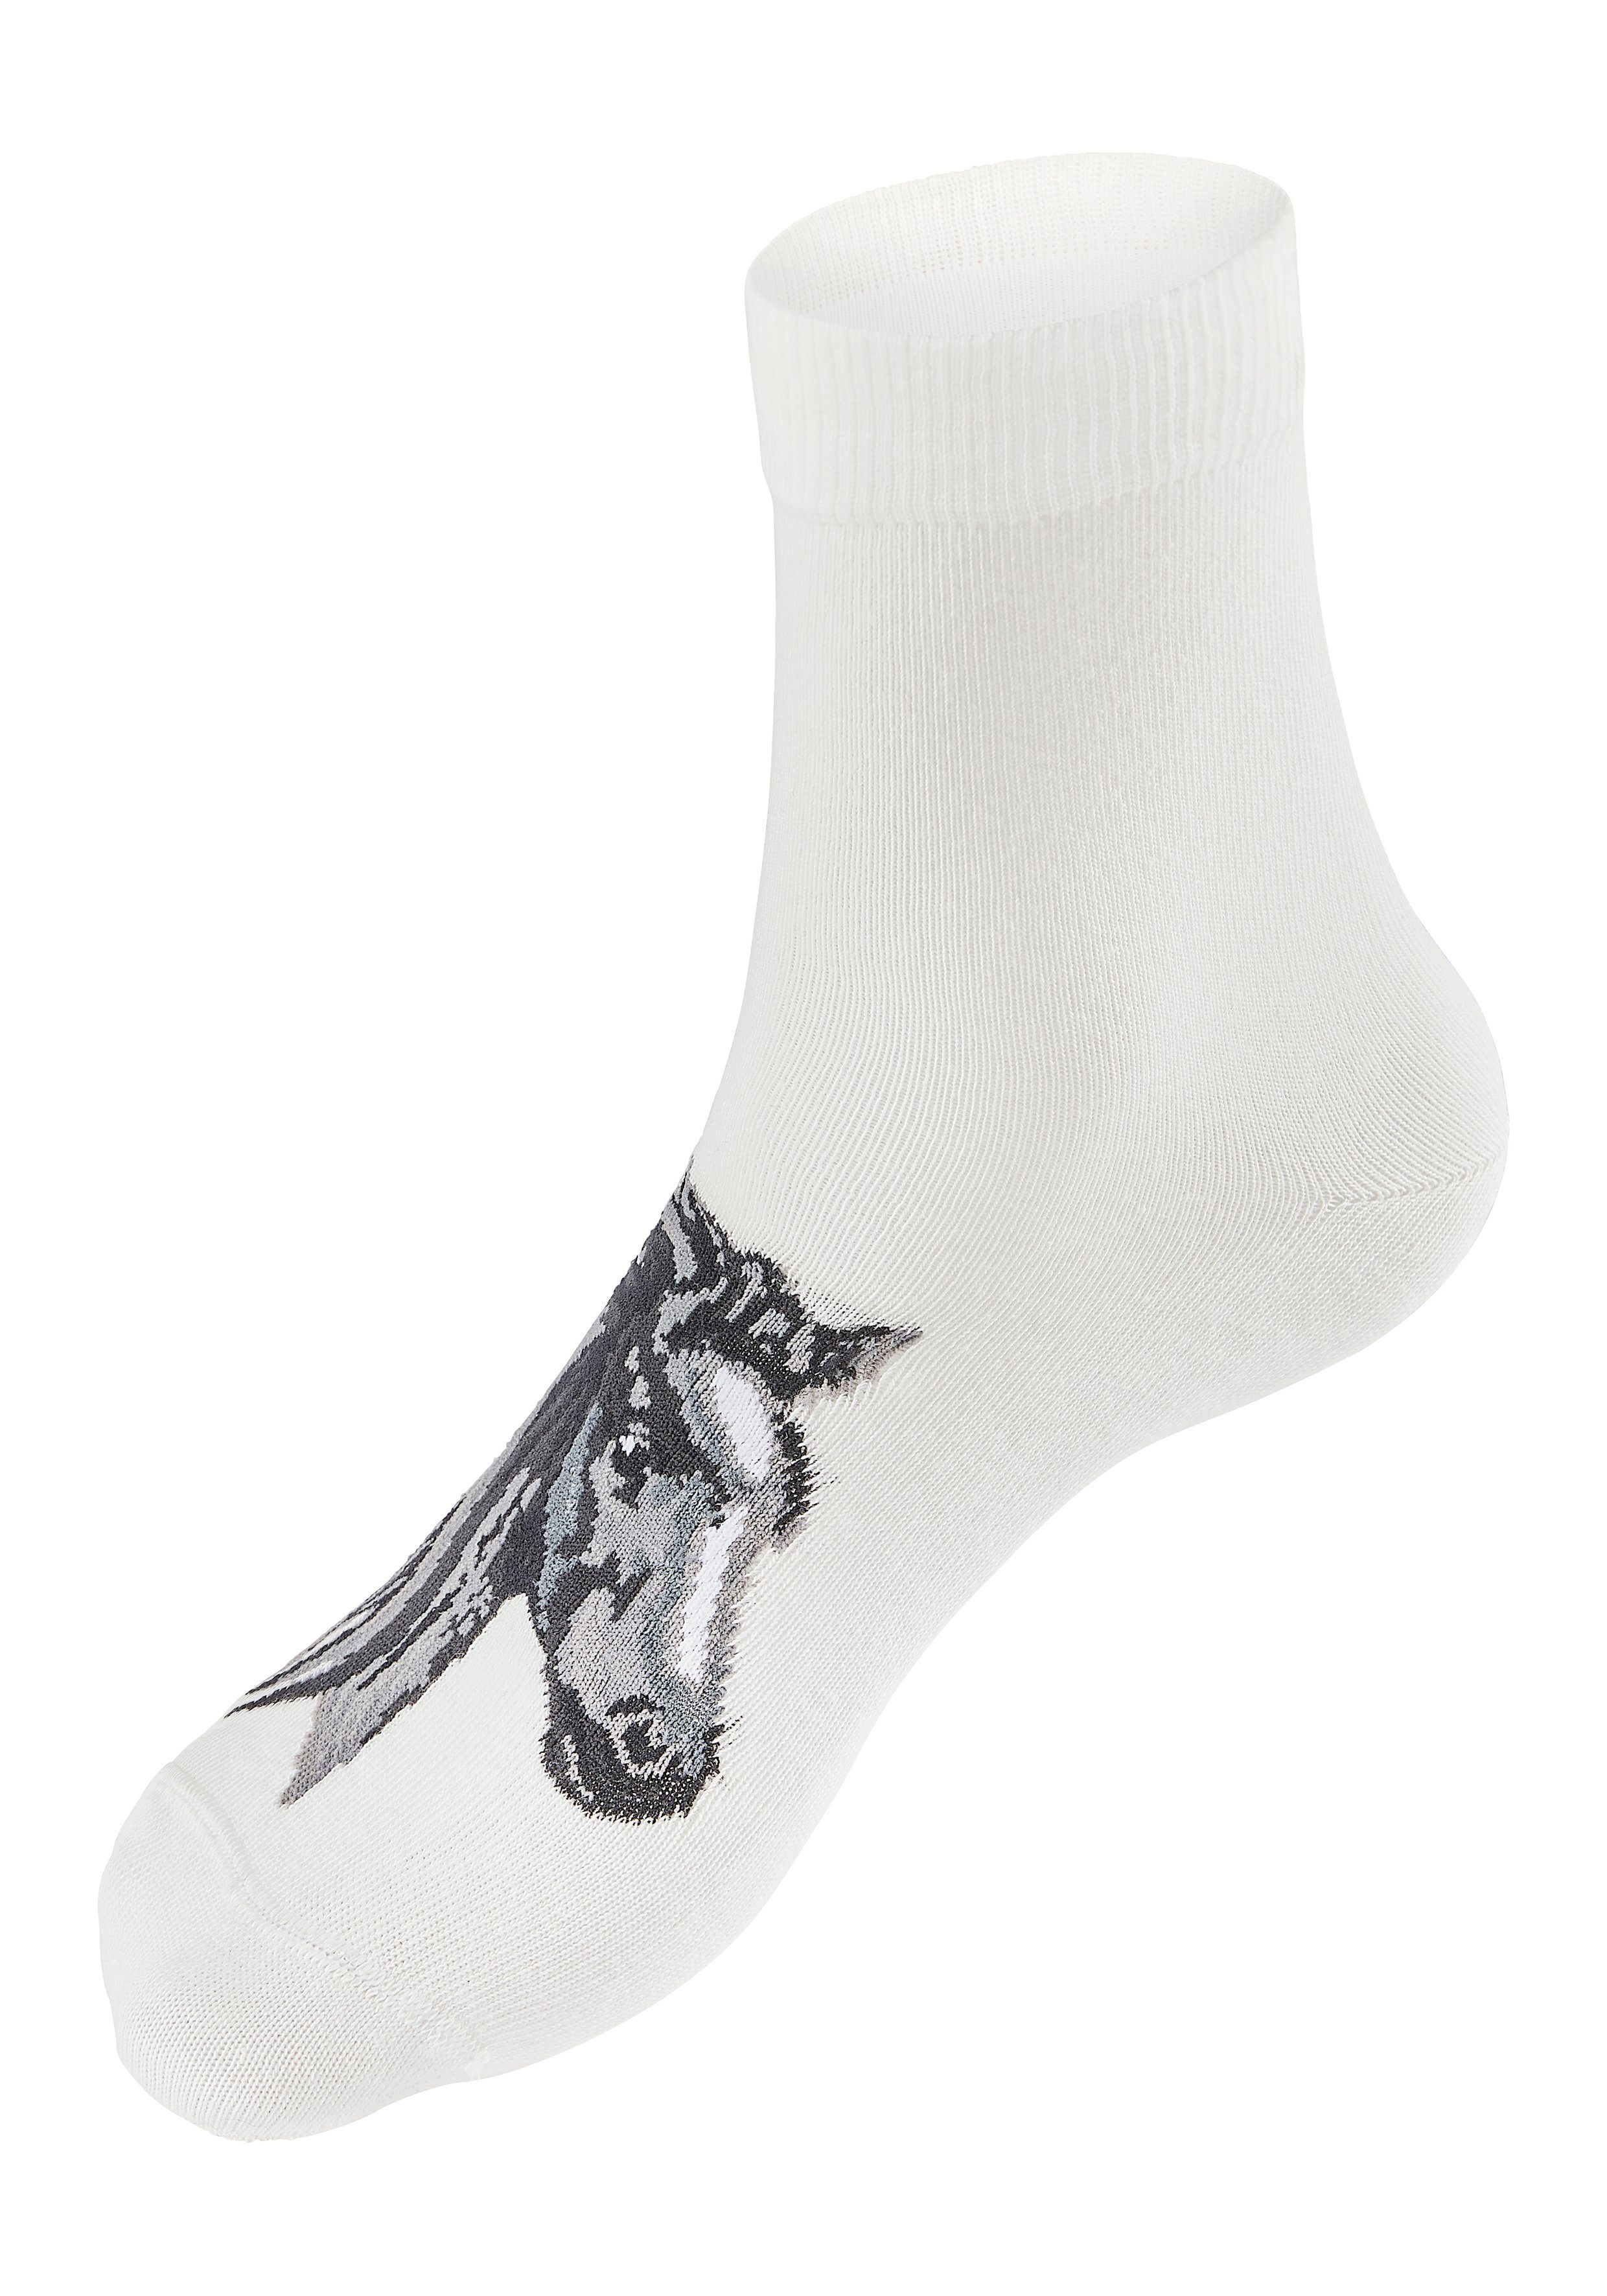 H.I.S Socken verschiedenen mit (5-Paar) Pferdemotiven